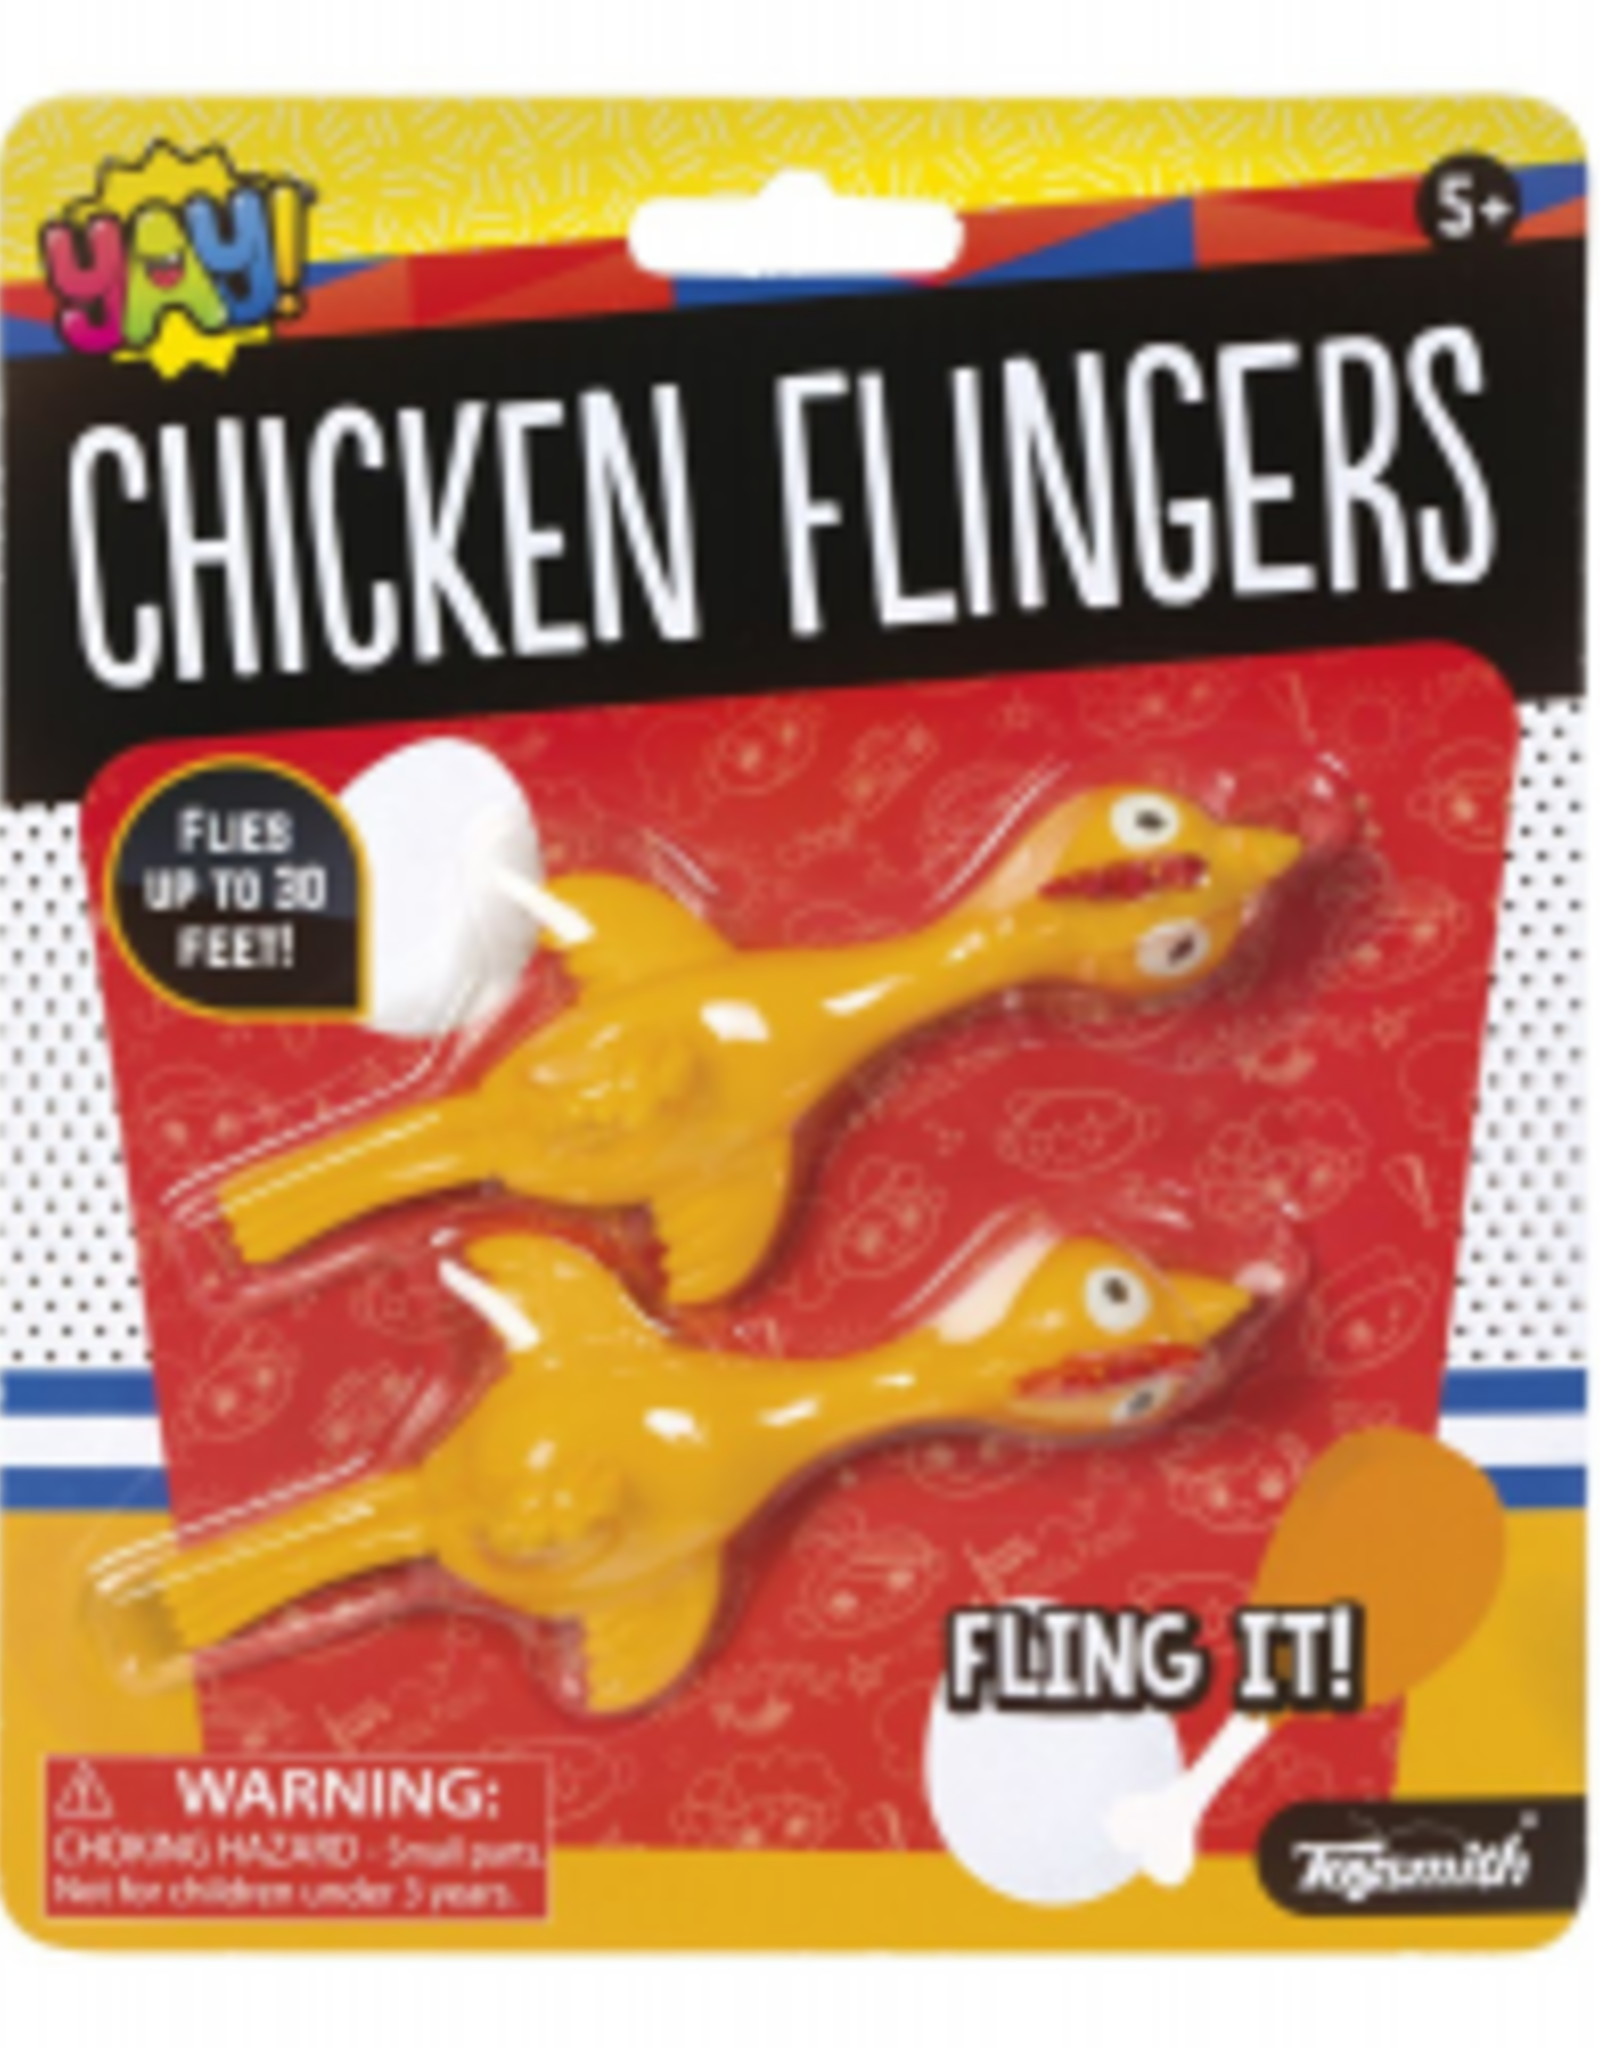 Toysmith Chicken Flingers - YAY